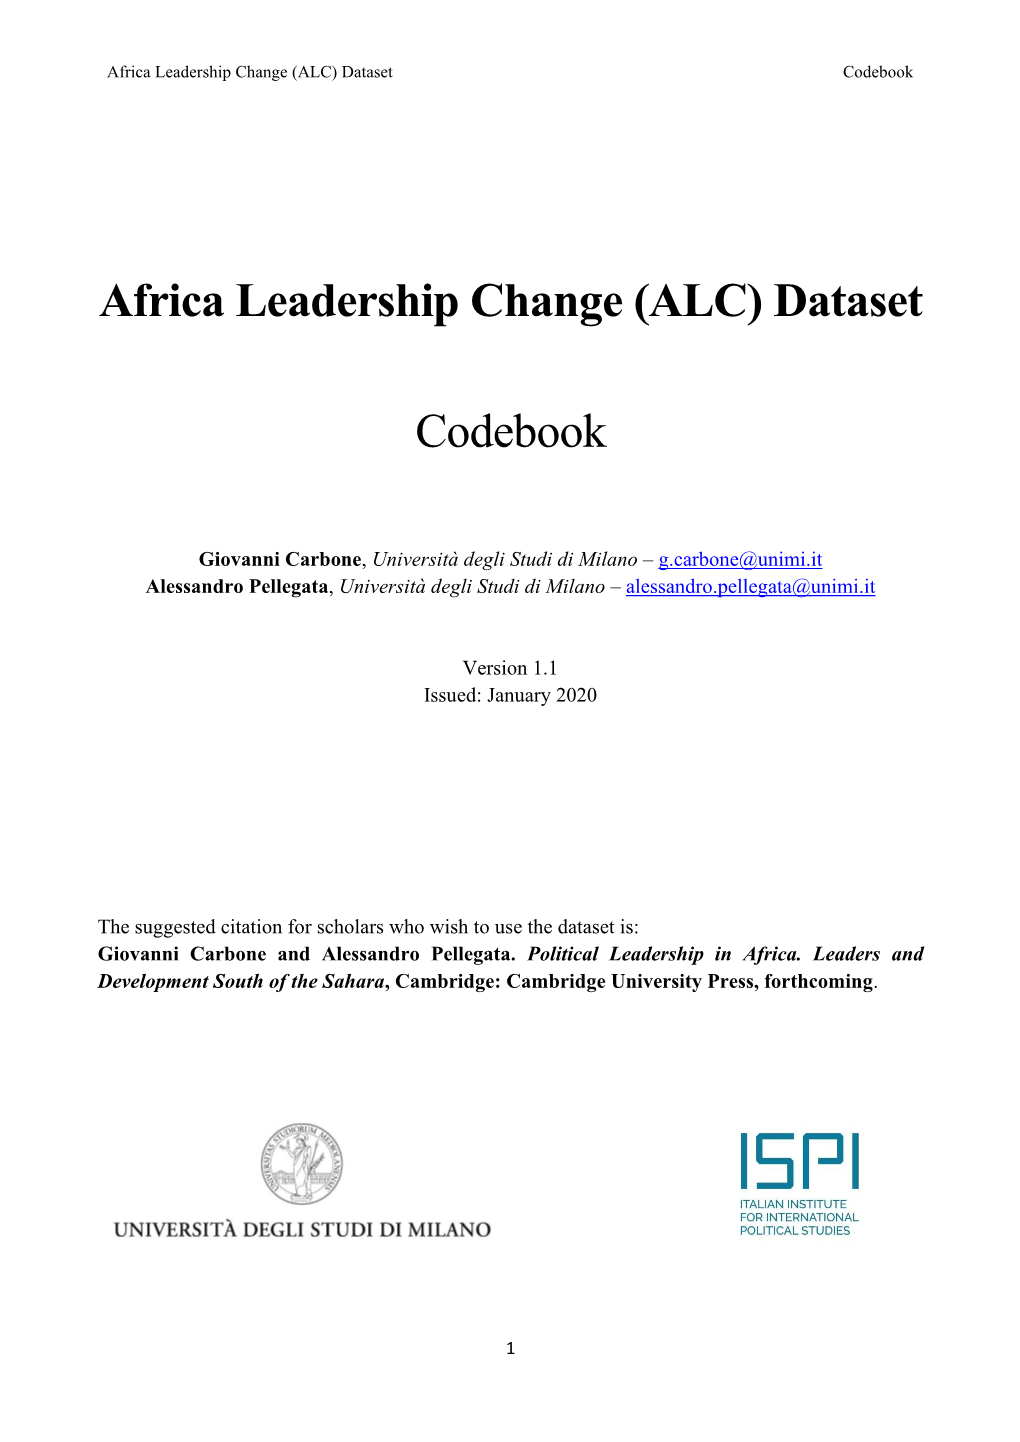 Africa Leadership Change (ALC) Dataset Codebook